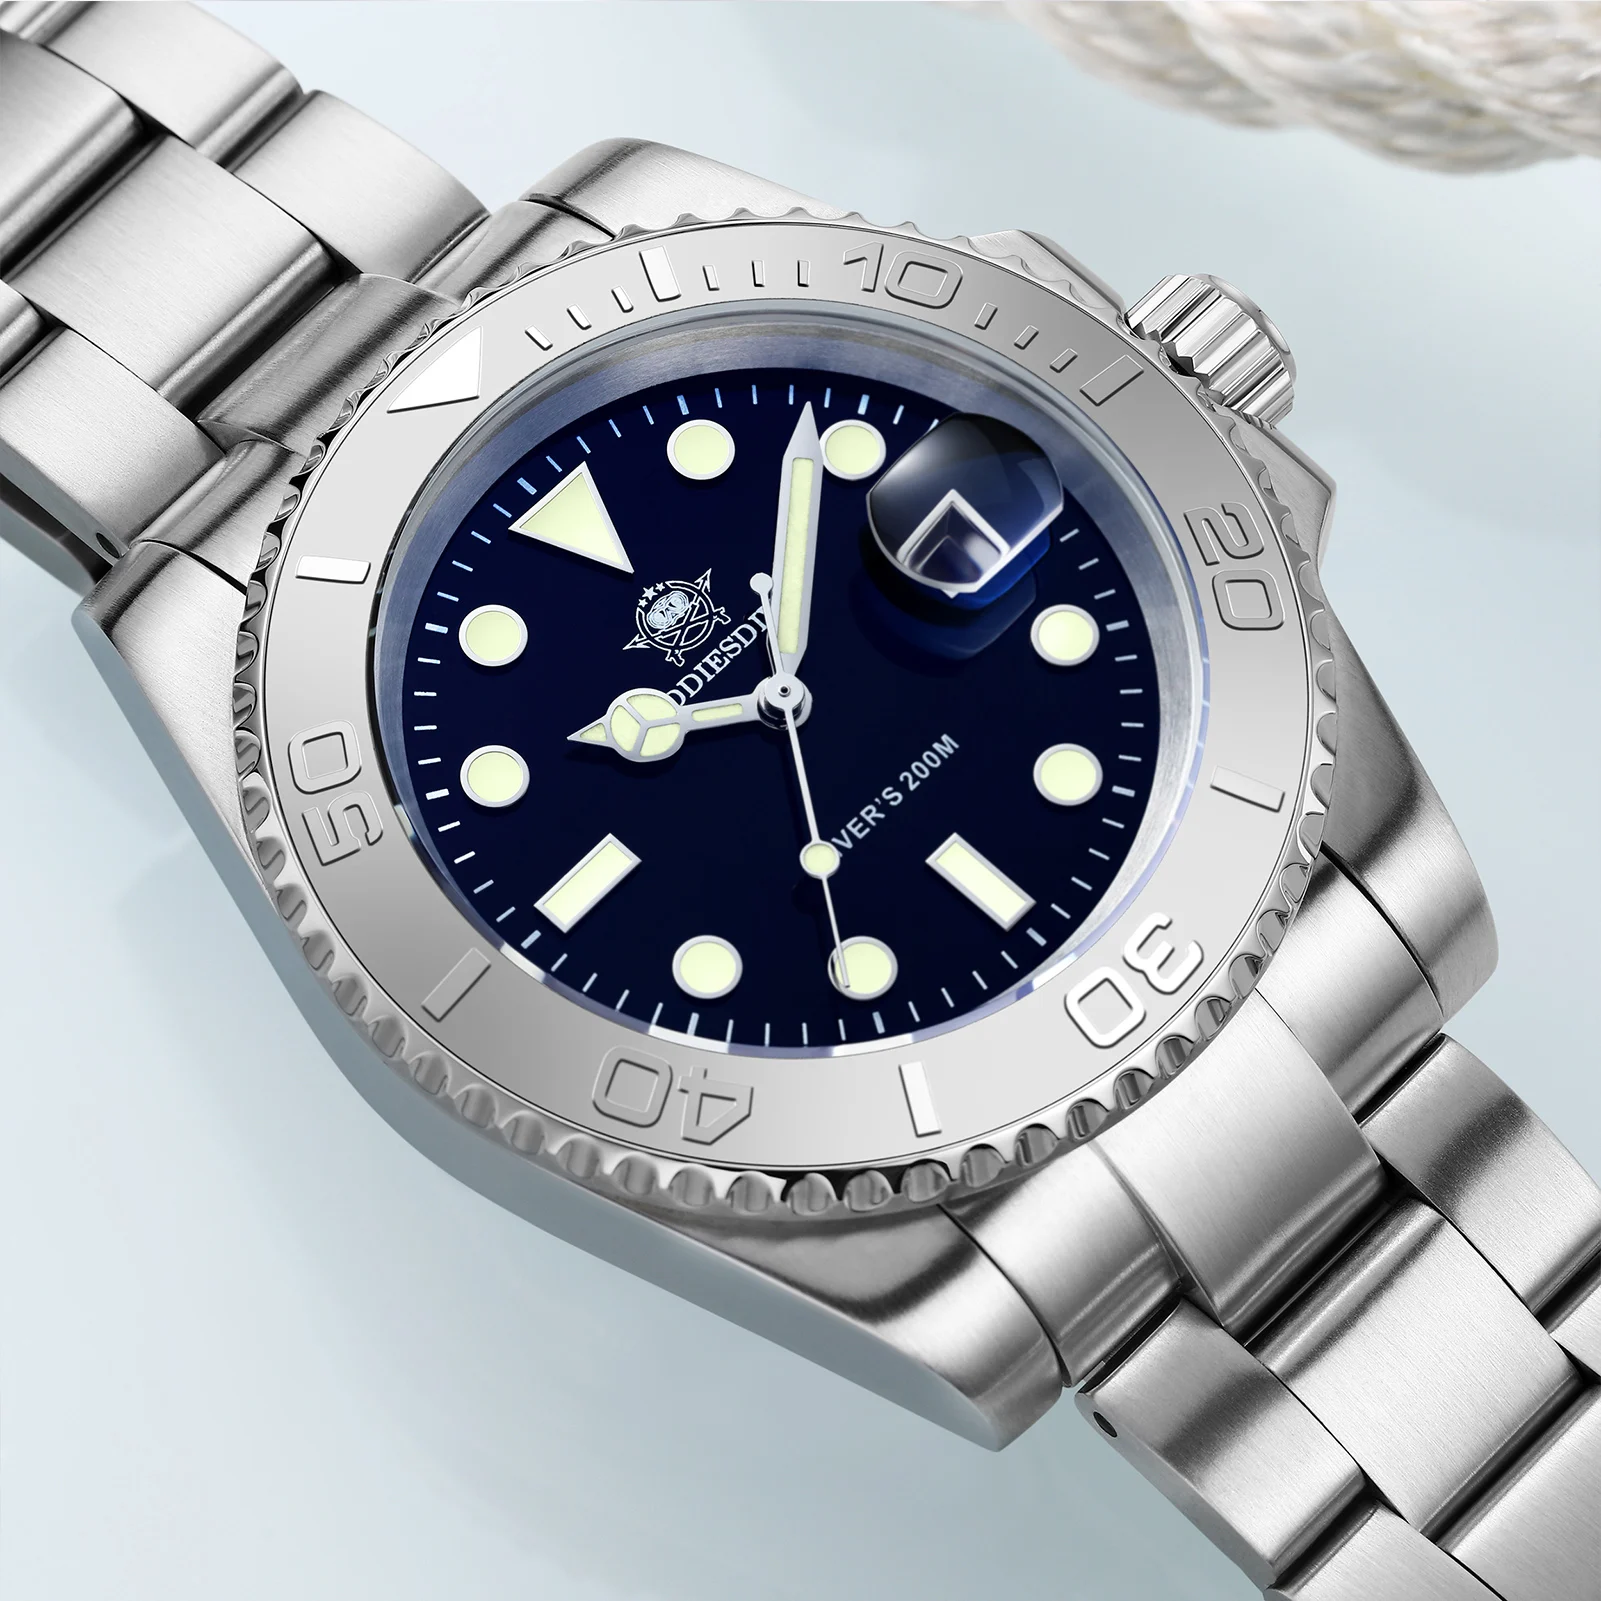 ADDIESIDVE Men's Stainless Steel Watch 200m Diver BGW9 Super Luminous Reloj Hombre European and American Business Quartz Watch